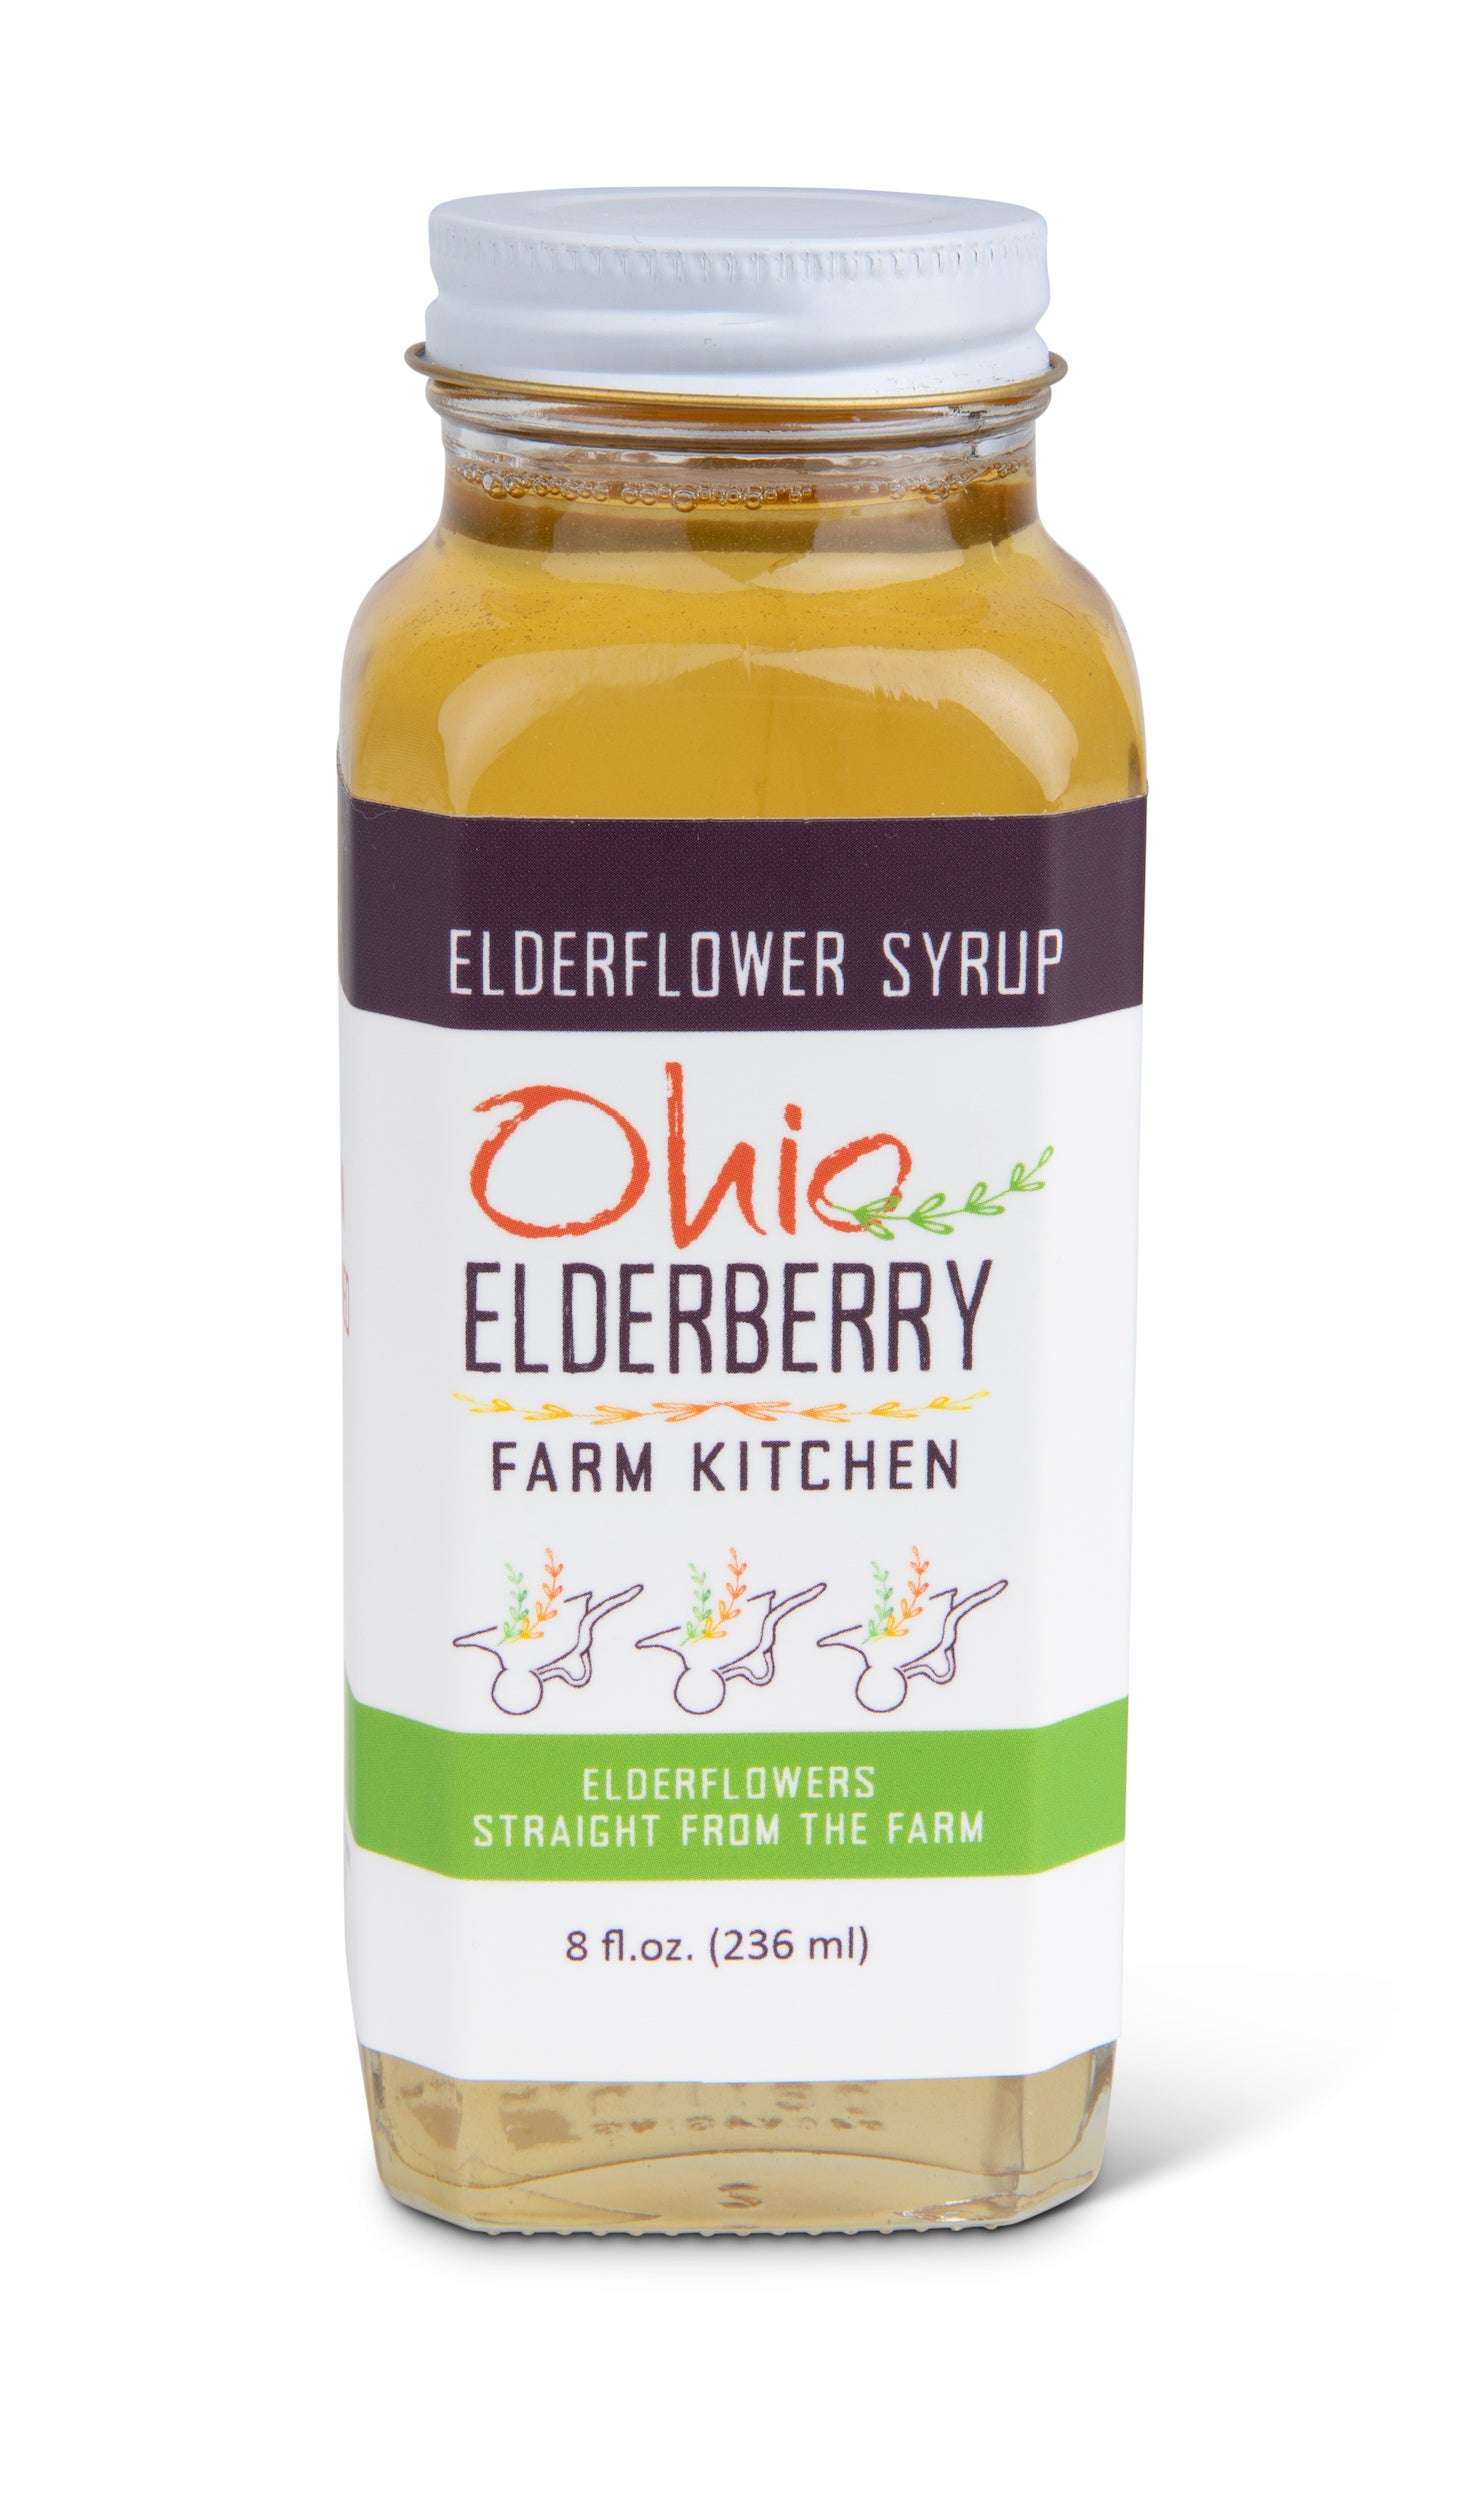 St. Germain Elderflower Liqueur 750ml – Bottle Barn